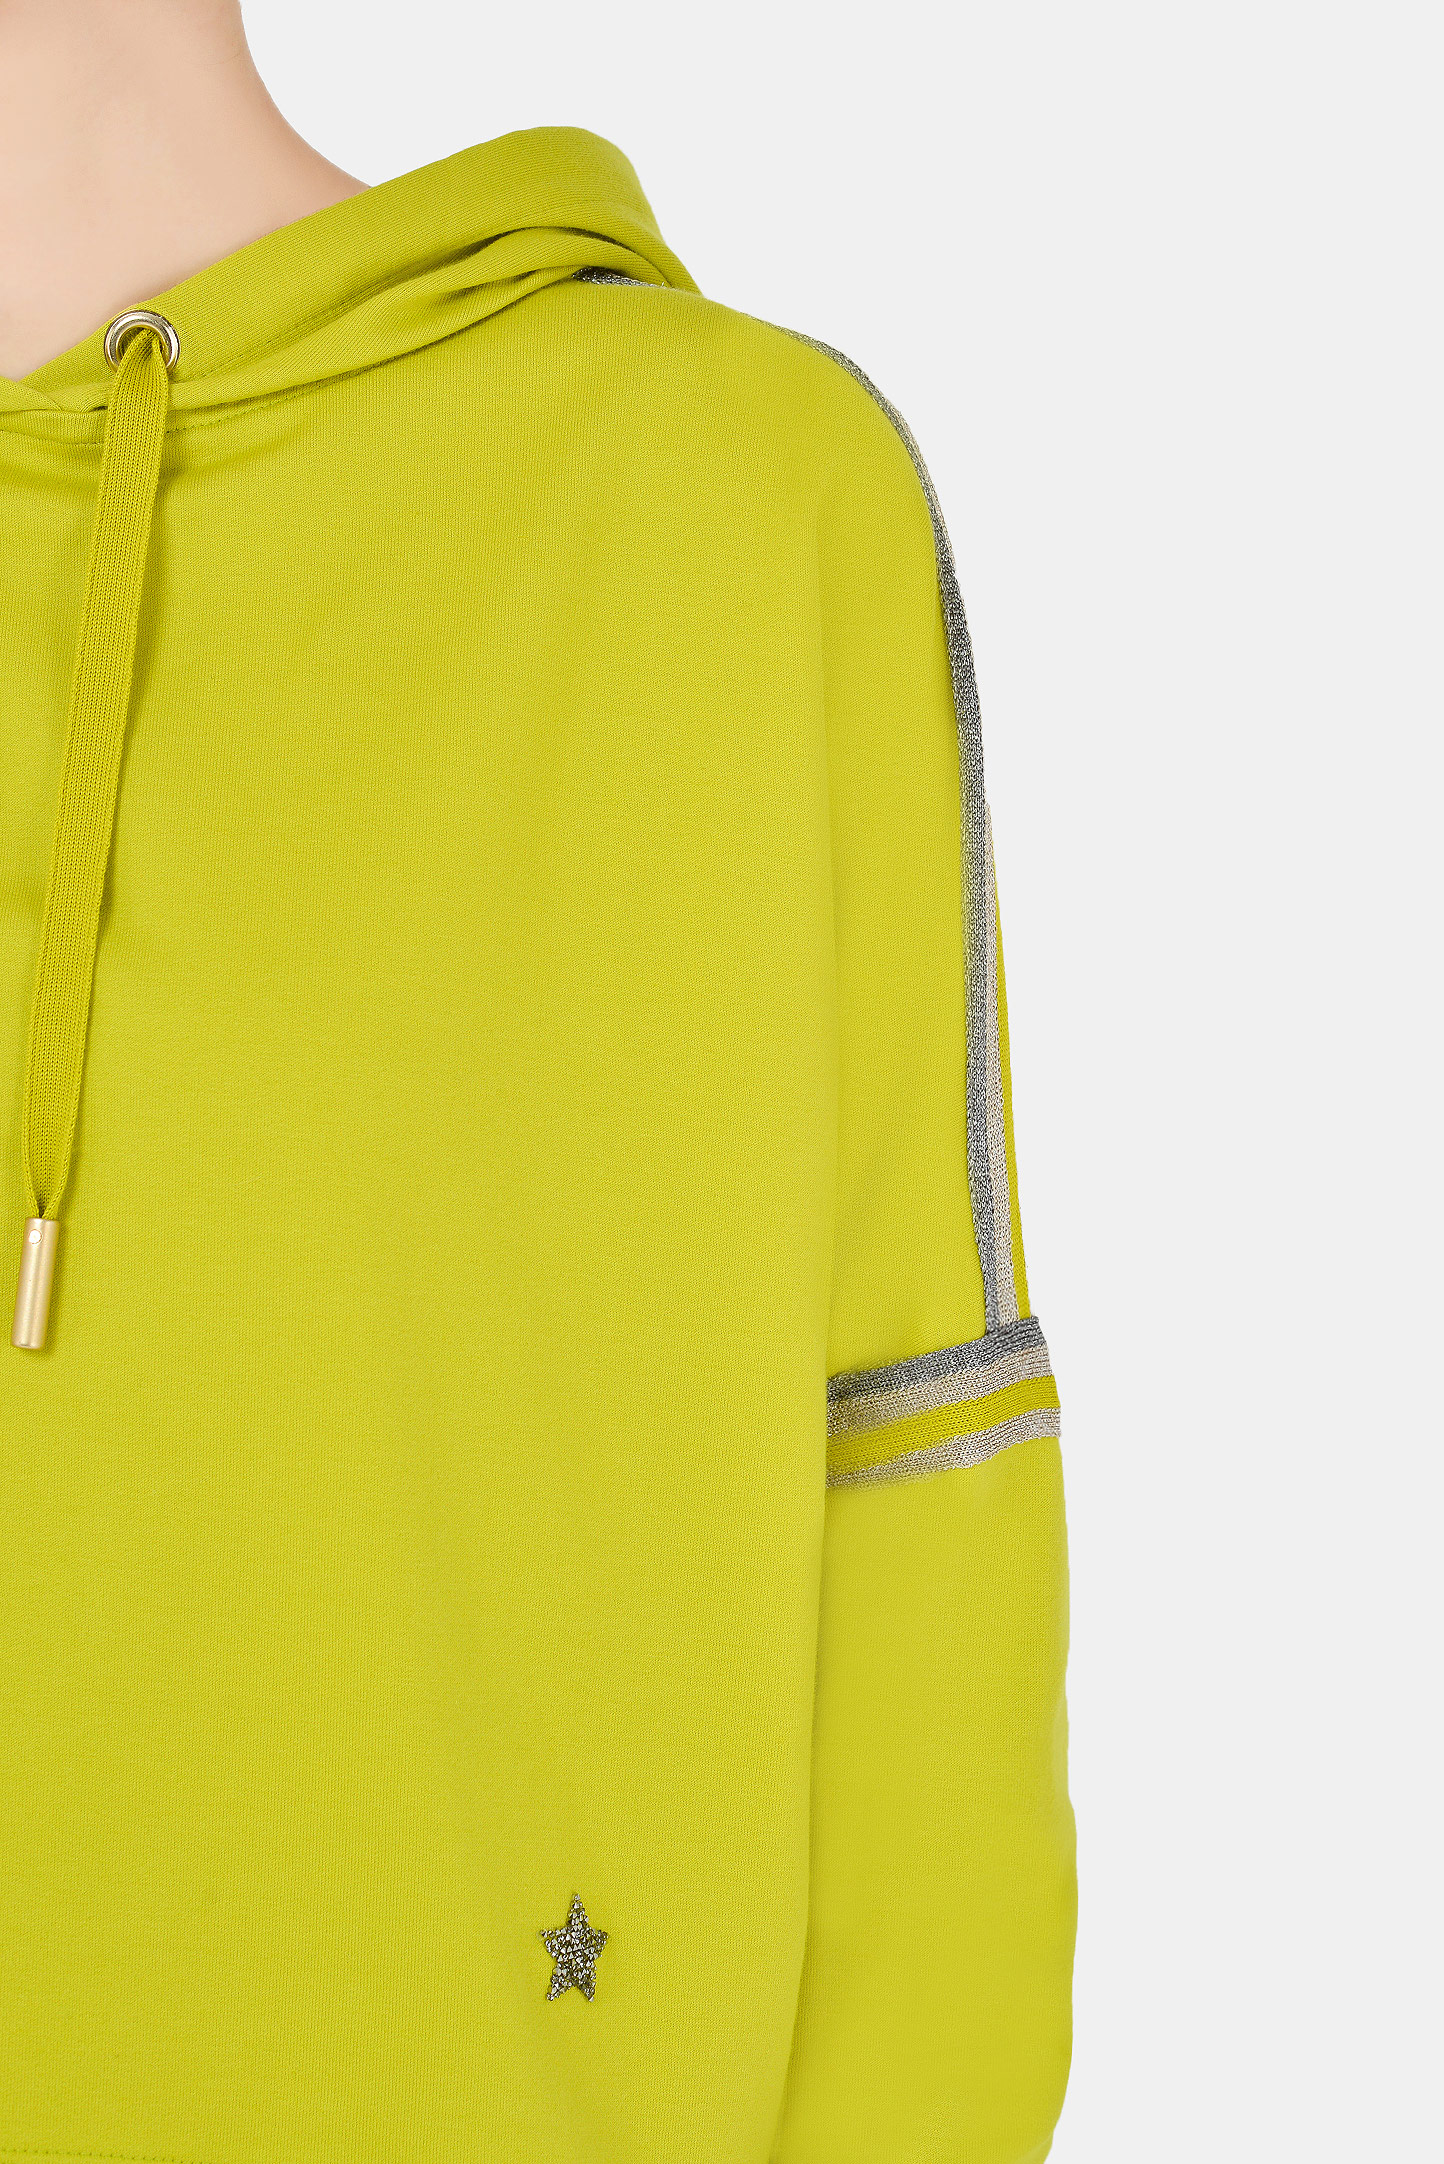 Куртка спорт LORENA ANTONIAZZI P2141FE008/3187, цвет: Желтый, Женский